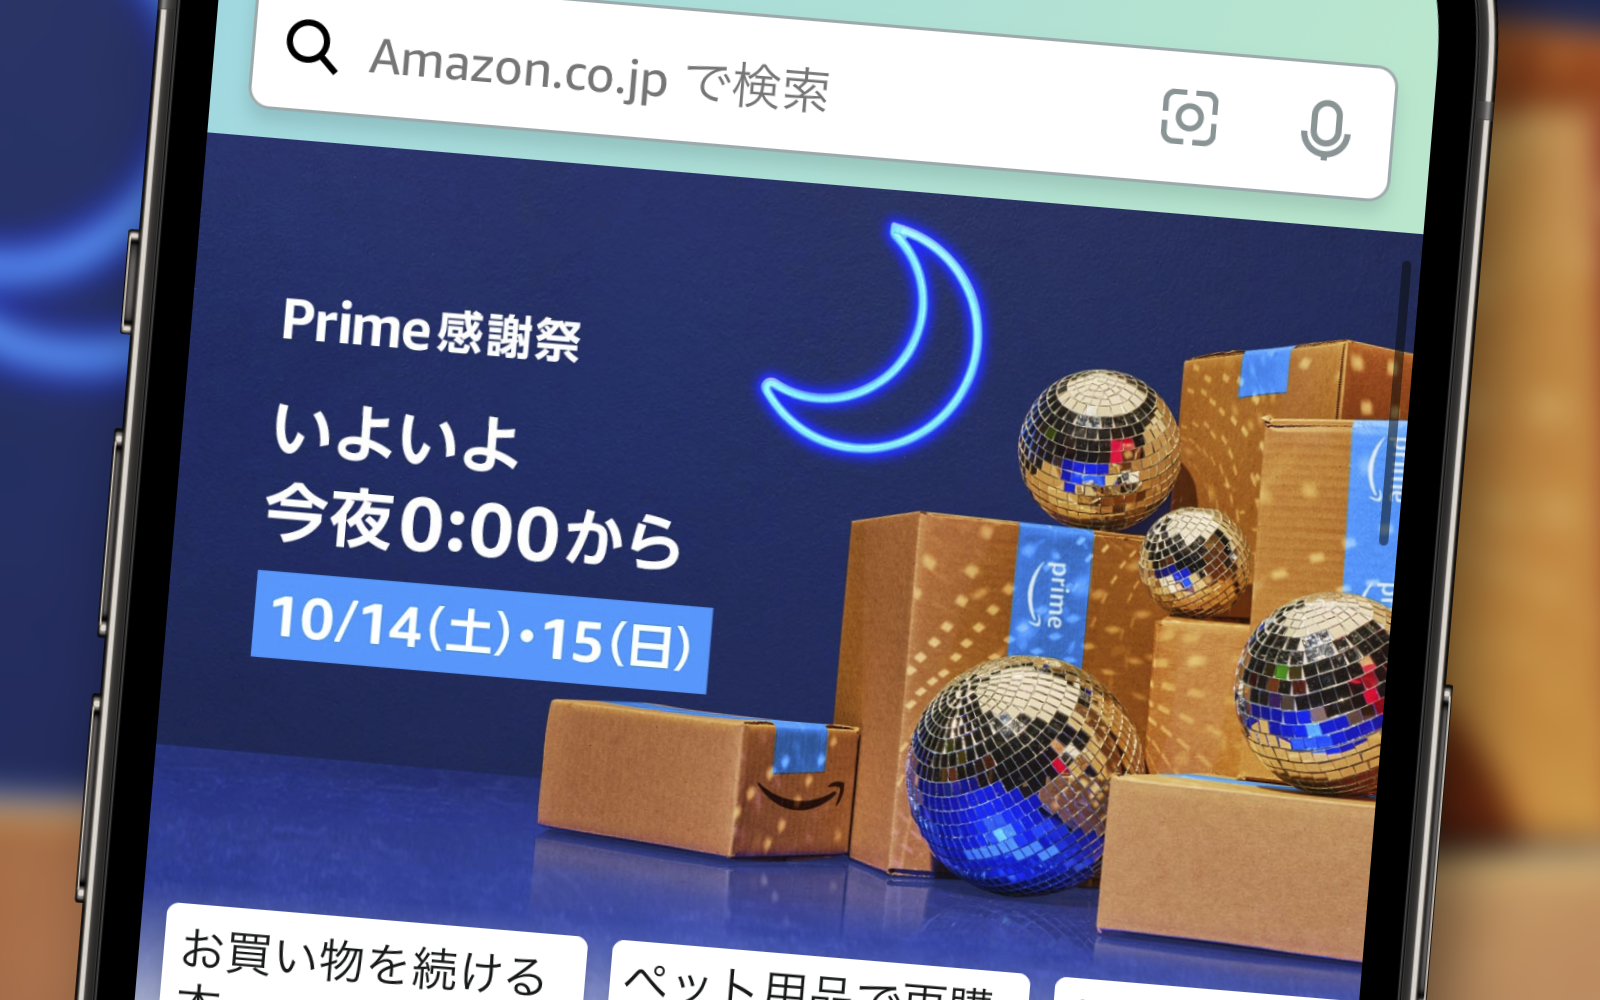 Amazon prime big day deals is tomorrow